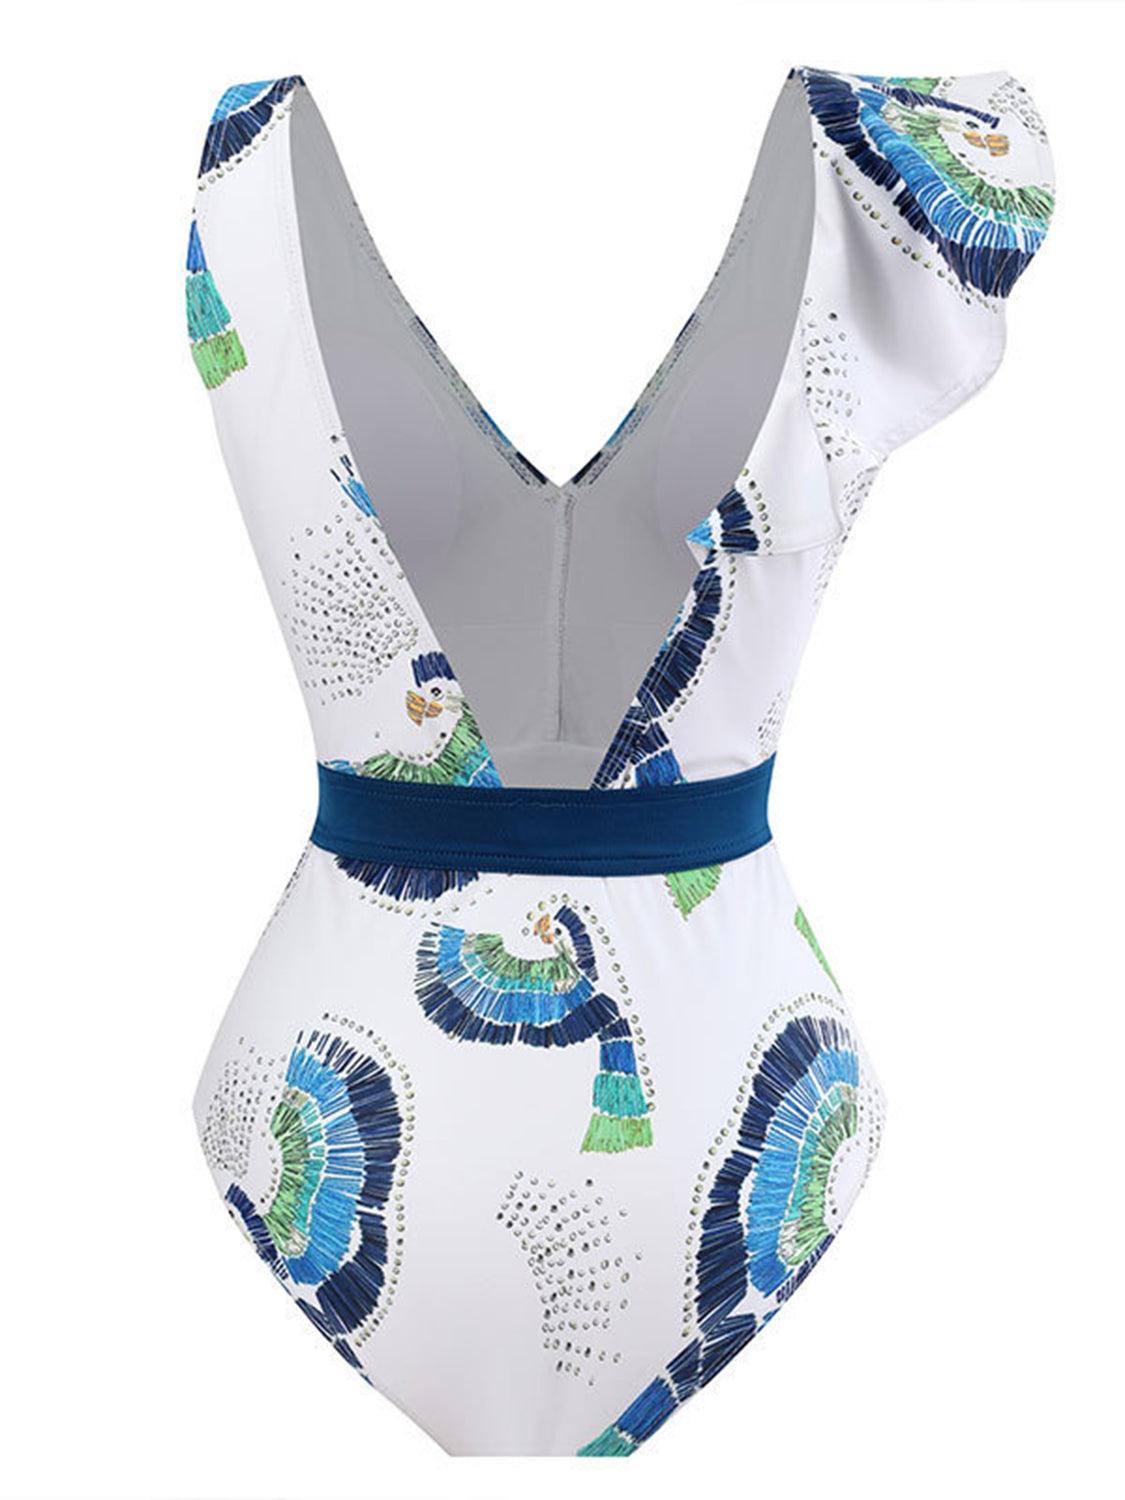 Bona Fide Fashion - Tied Printed V-Neck Sleeveless One-Piece Swimwear - Women Fashion - Bona Fide Fashion